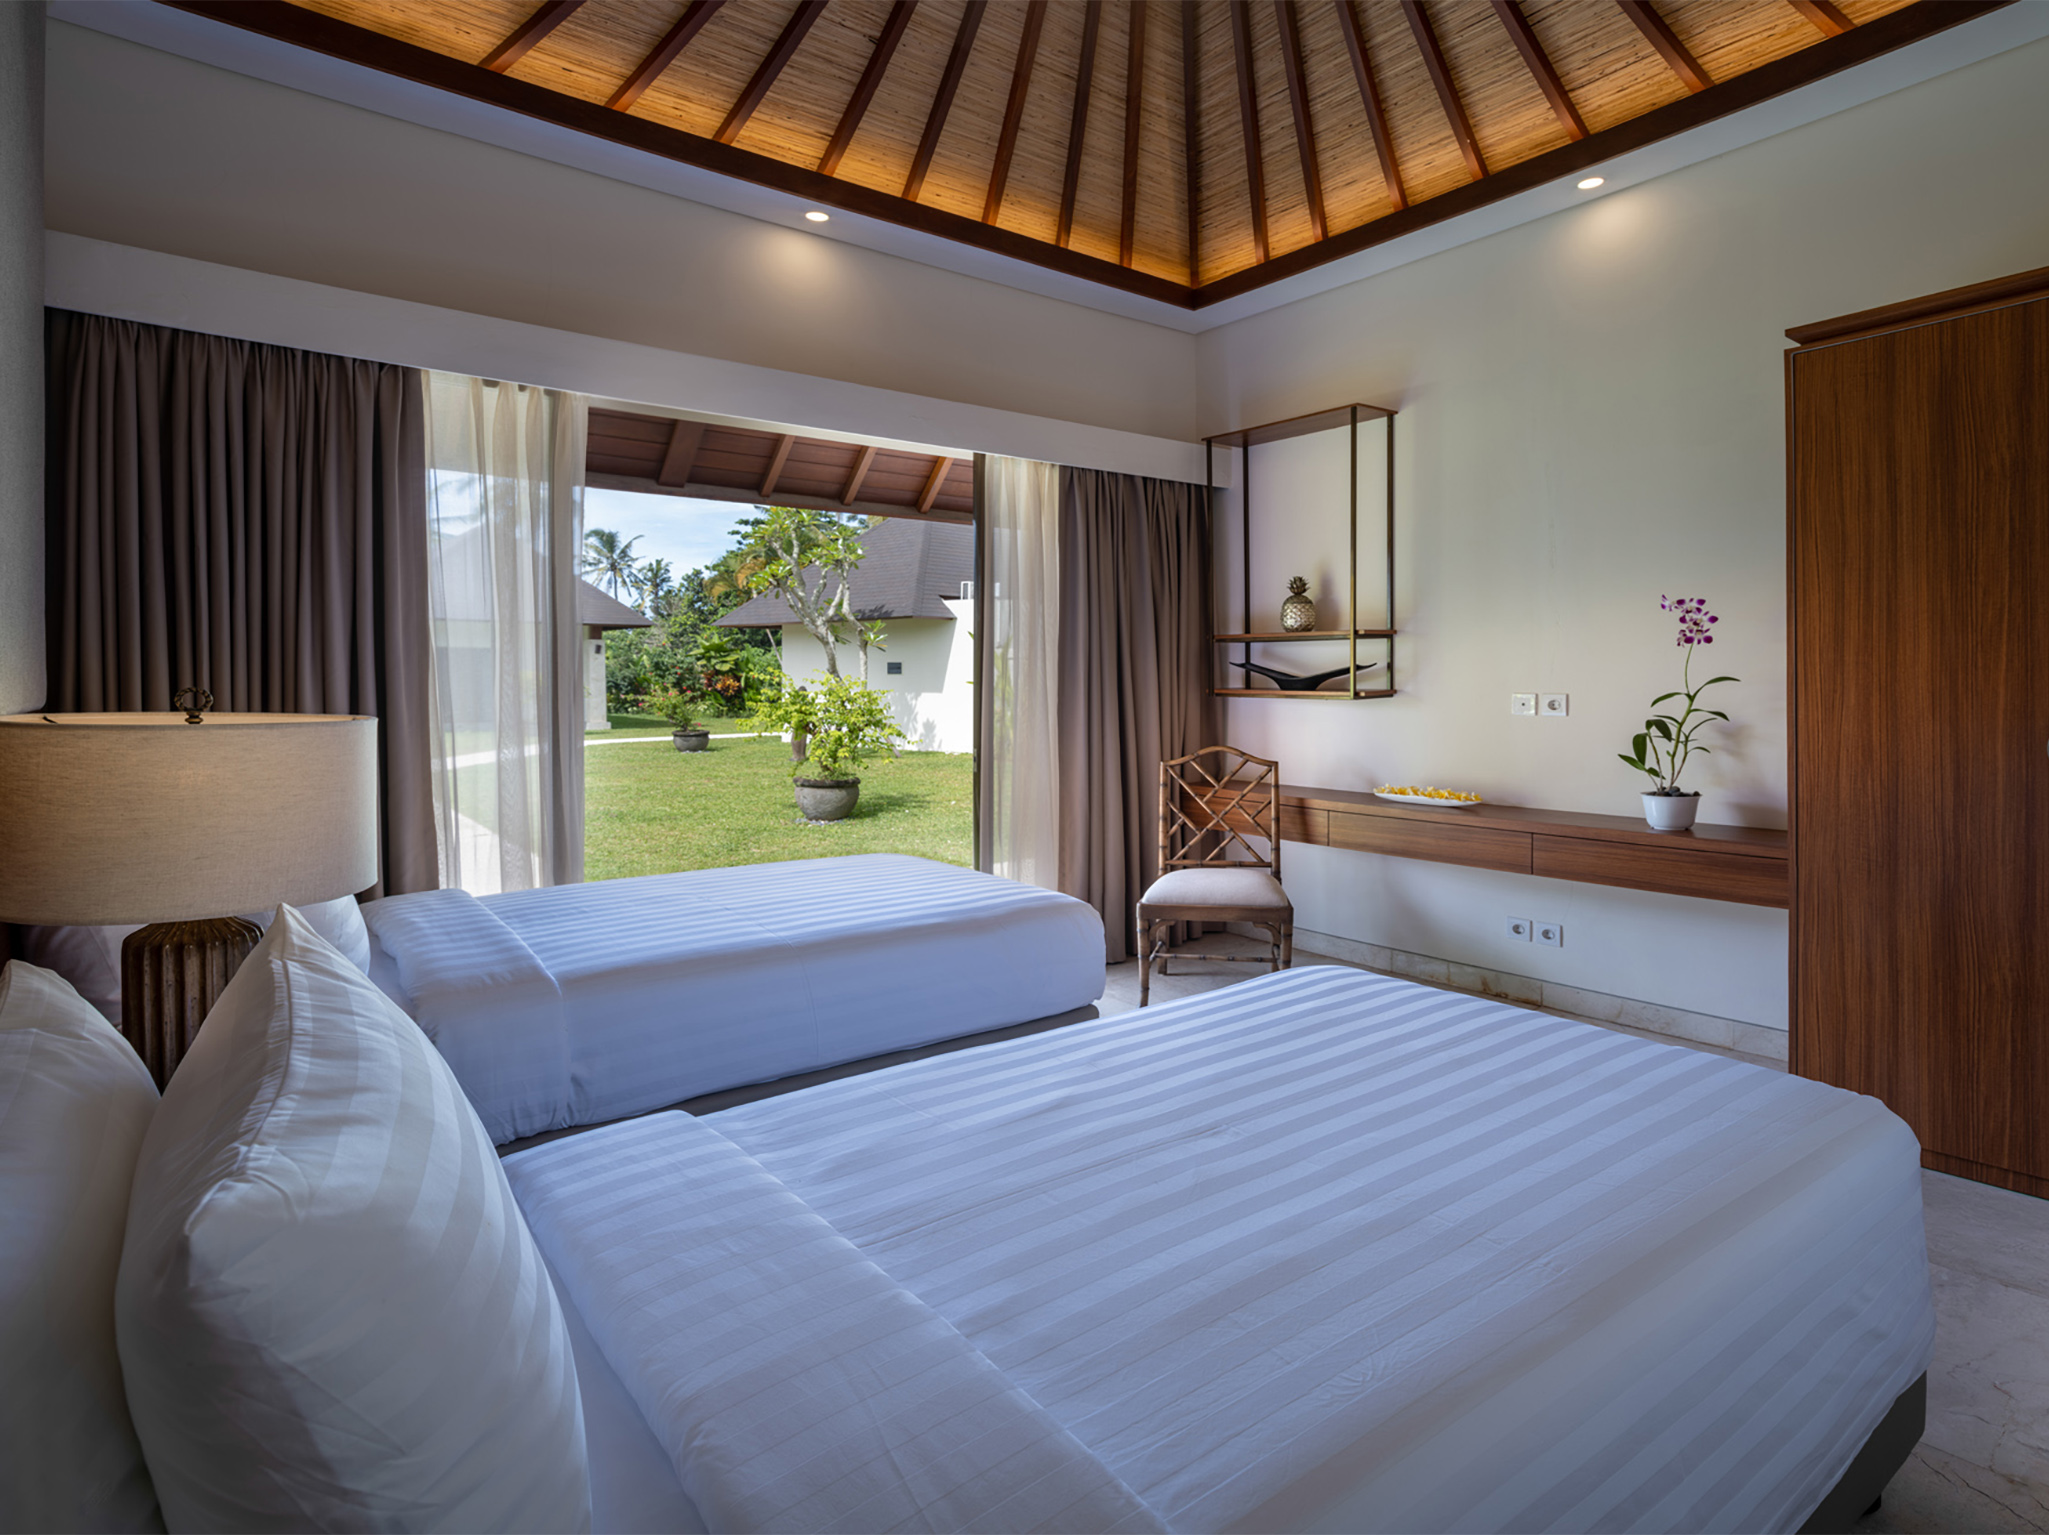 Villa Kailasha - Twin room and garden access - Villa Kailasha, Tabanan, Bali